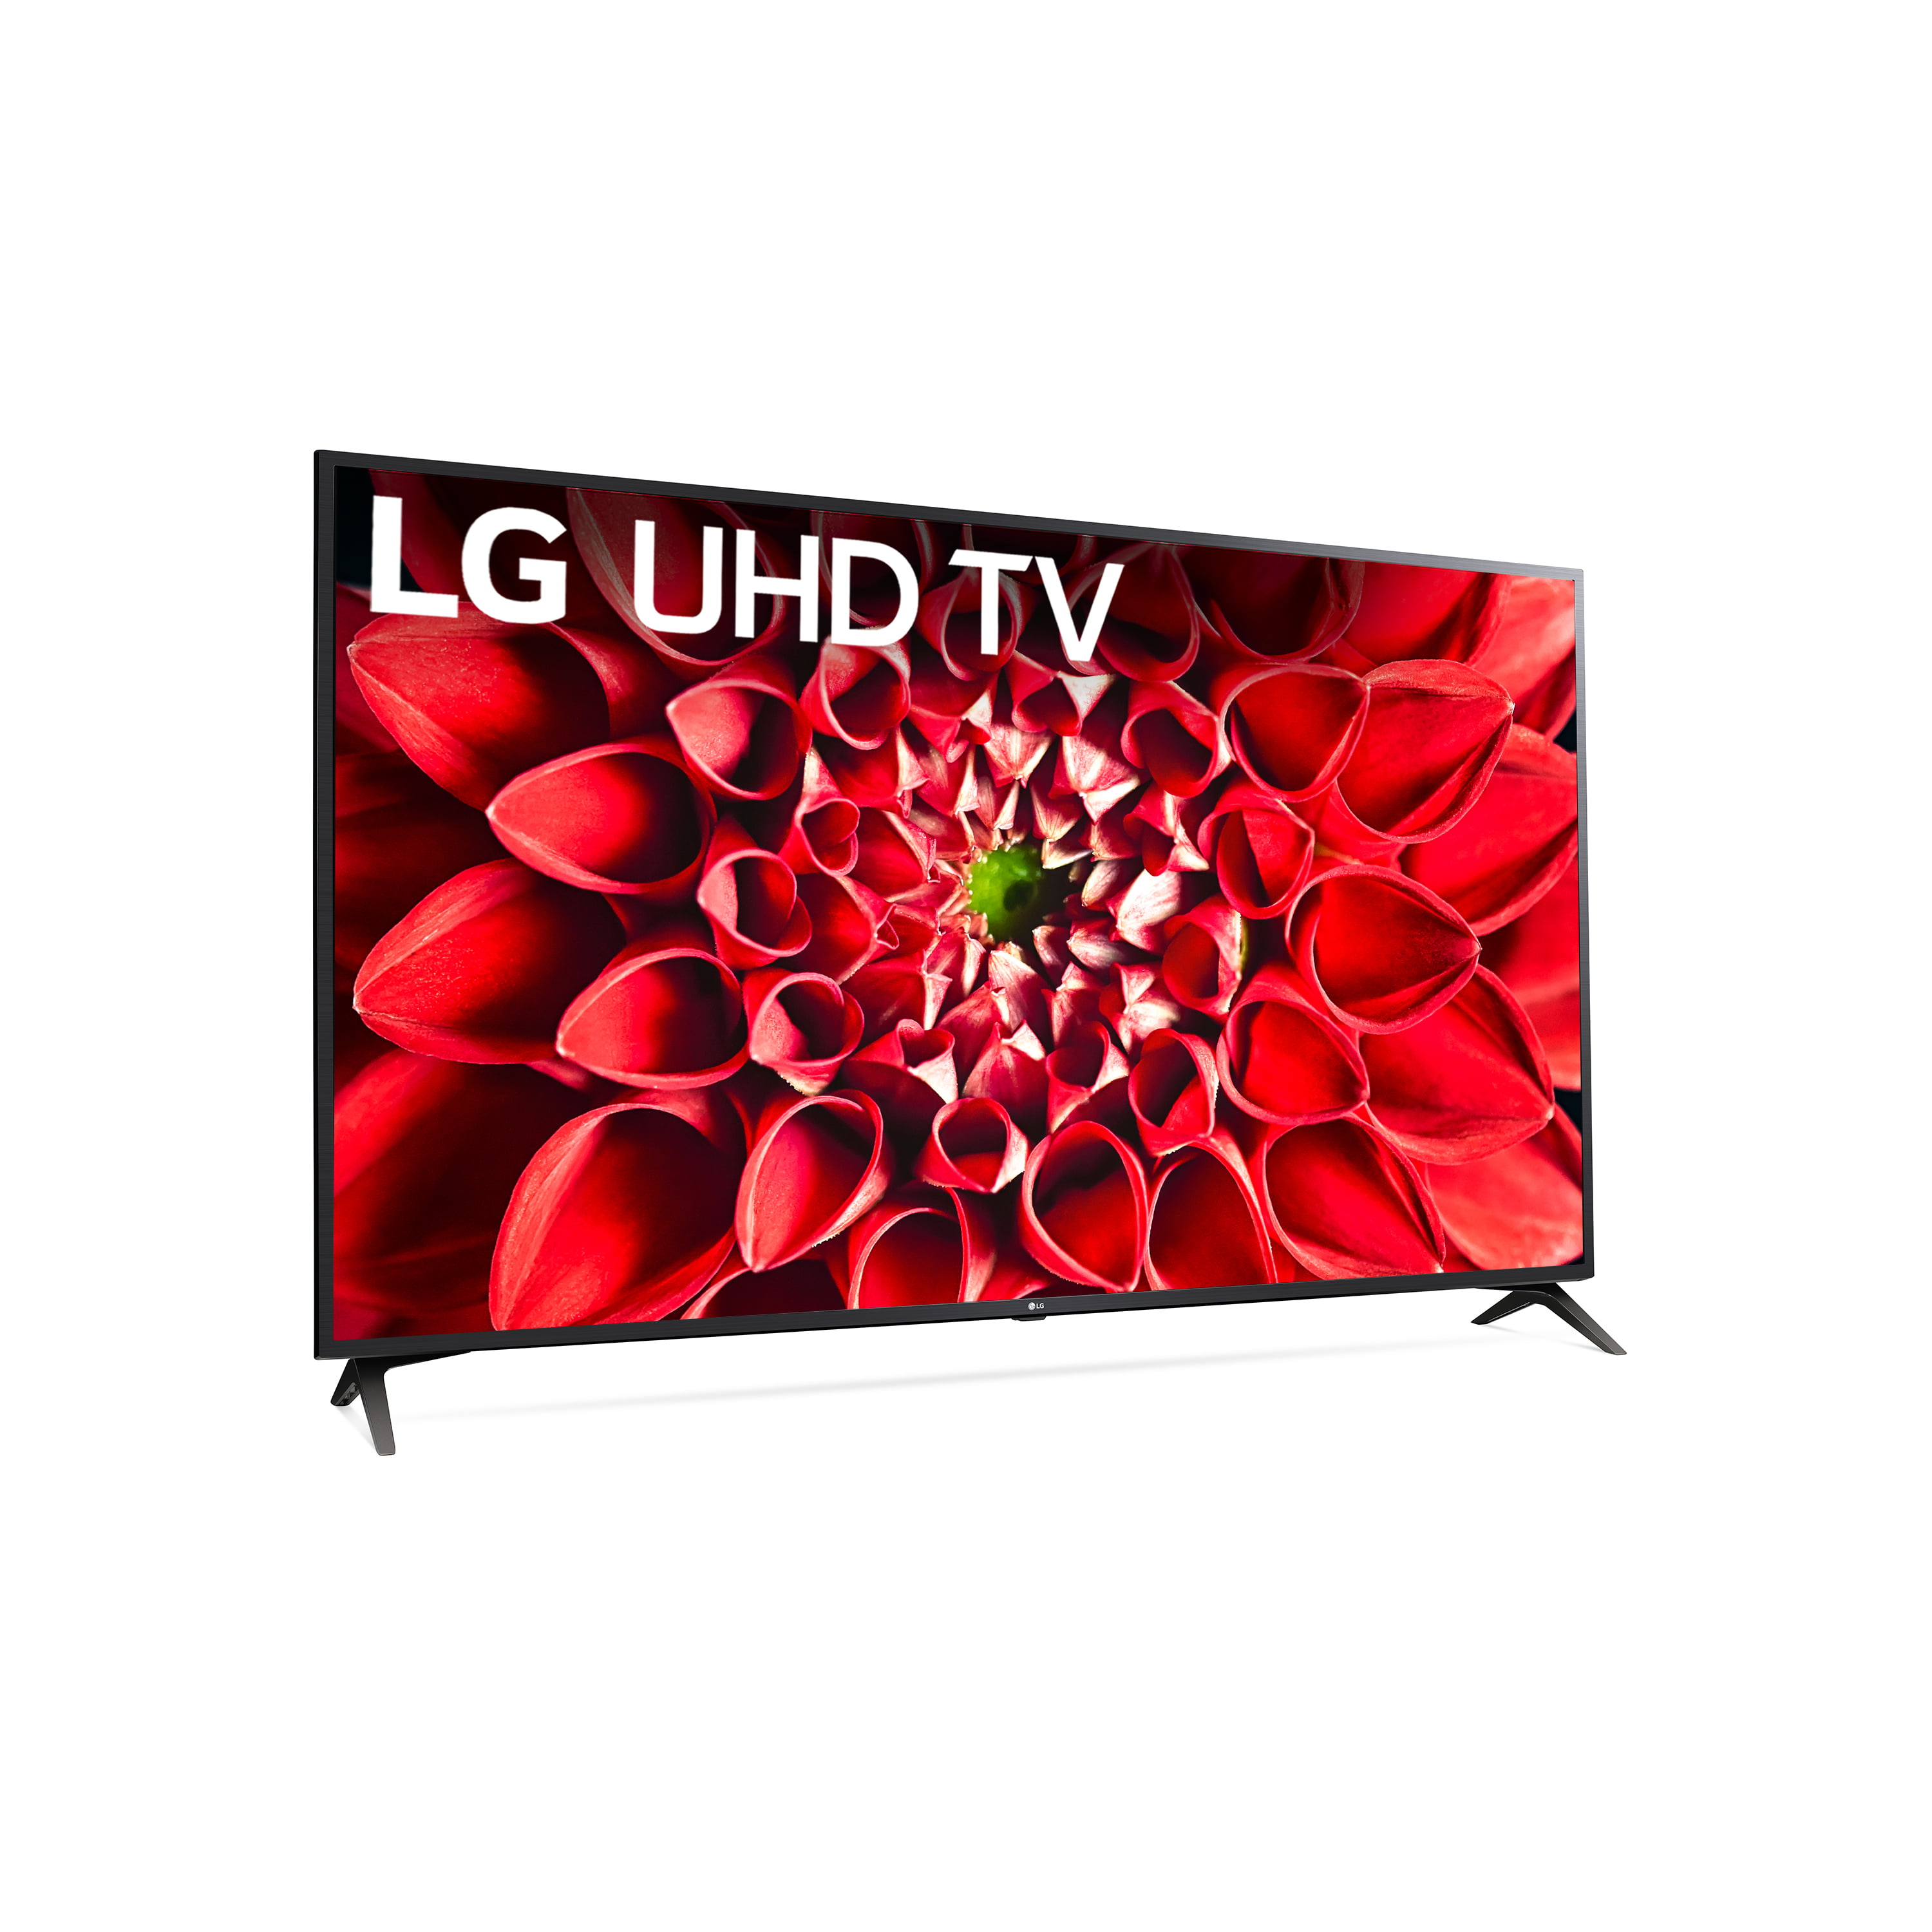 LG 70 Class 4K UHD 2160P Smart TV with HDR - 70UN7070PUA 2020 Model 